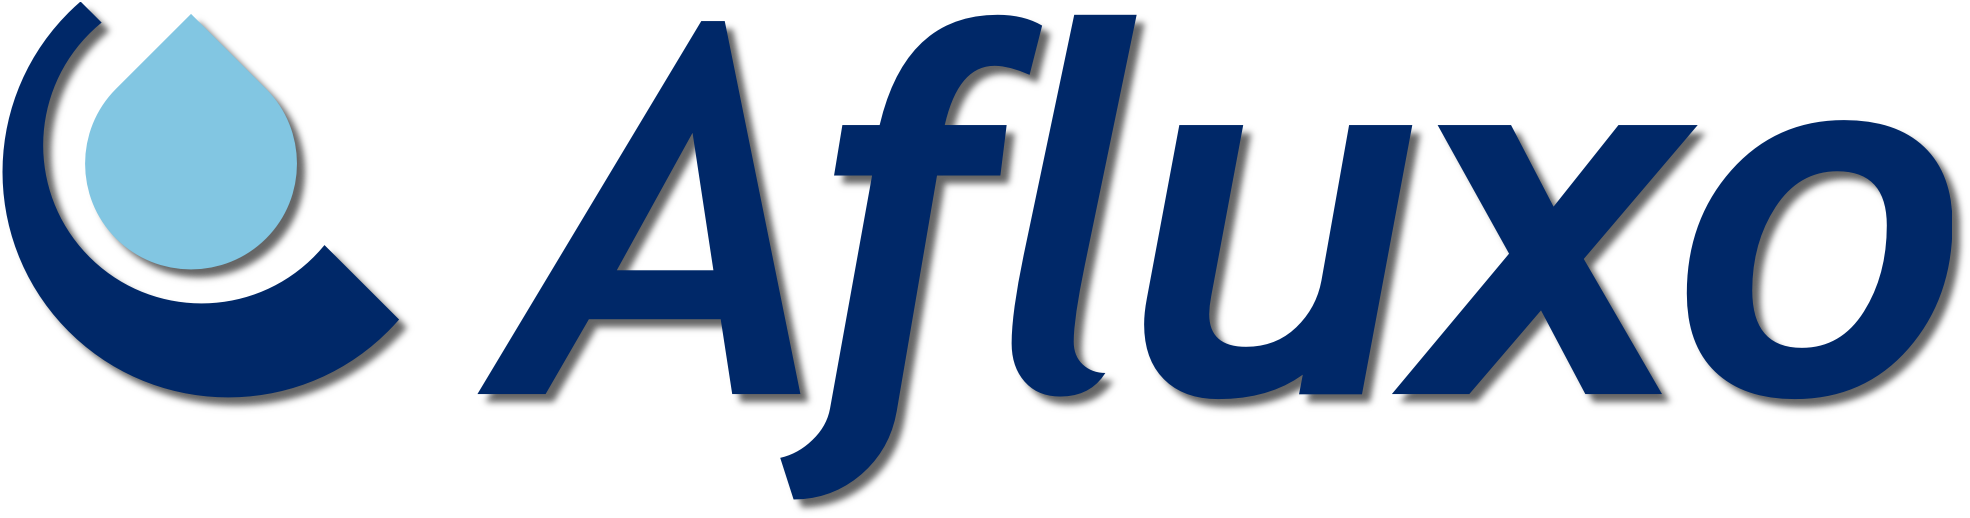 Logotipo Afluxo